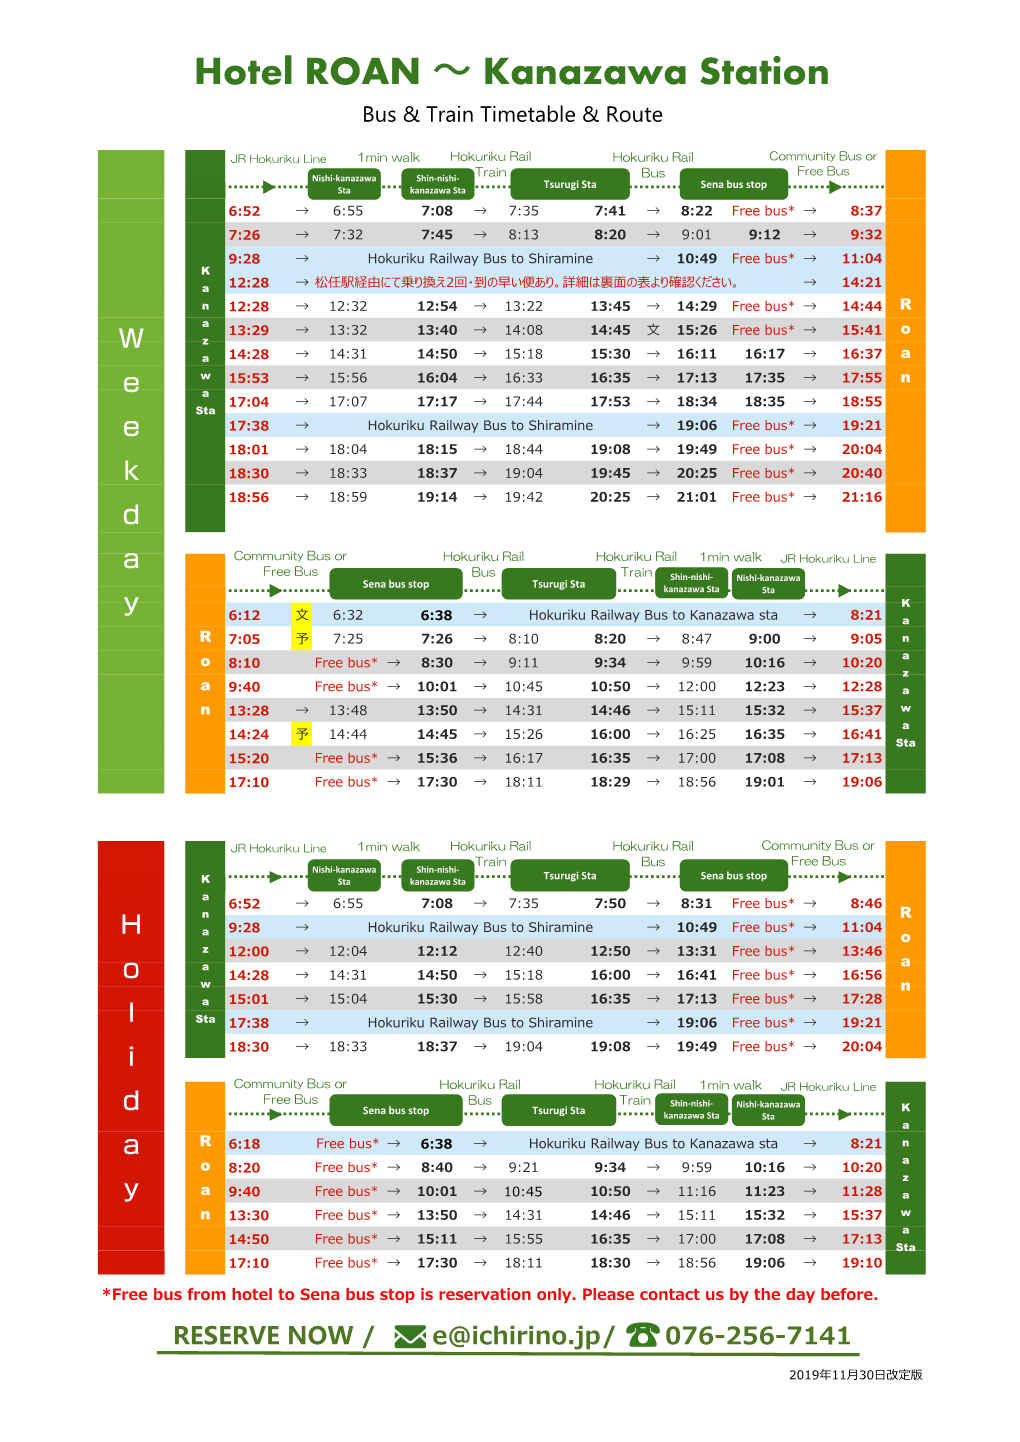 Hotel ROAN ～ Kanazawa Station Bus & Train Timetable & Route